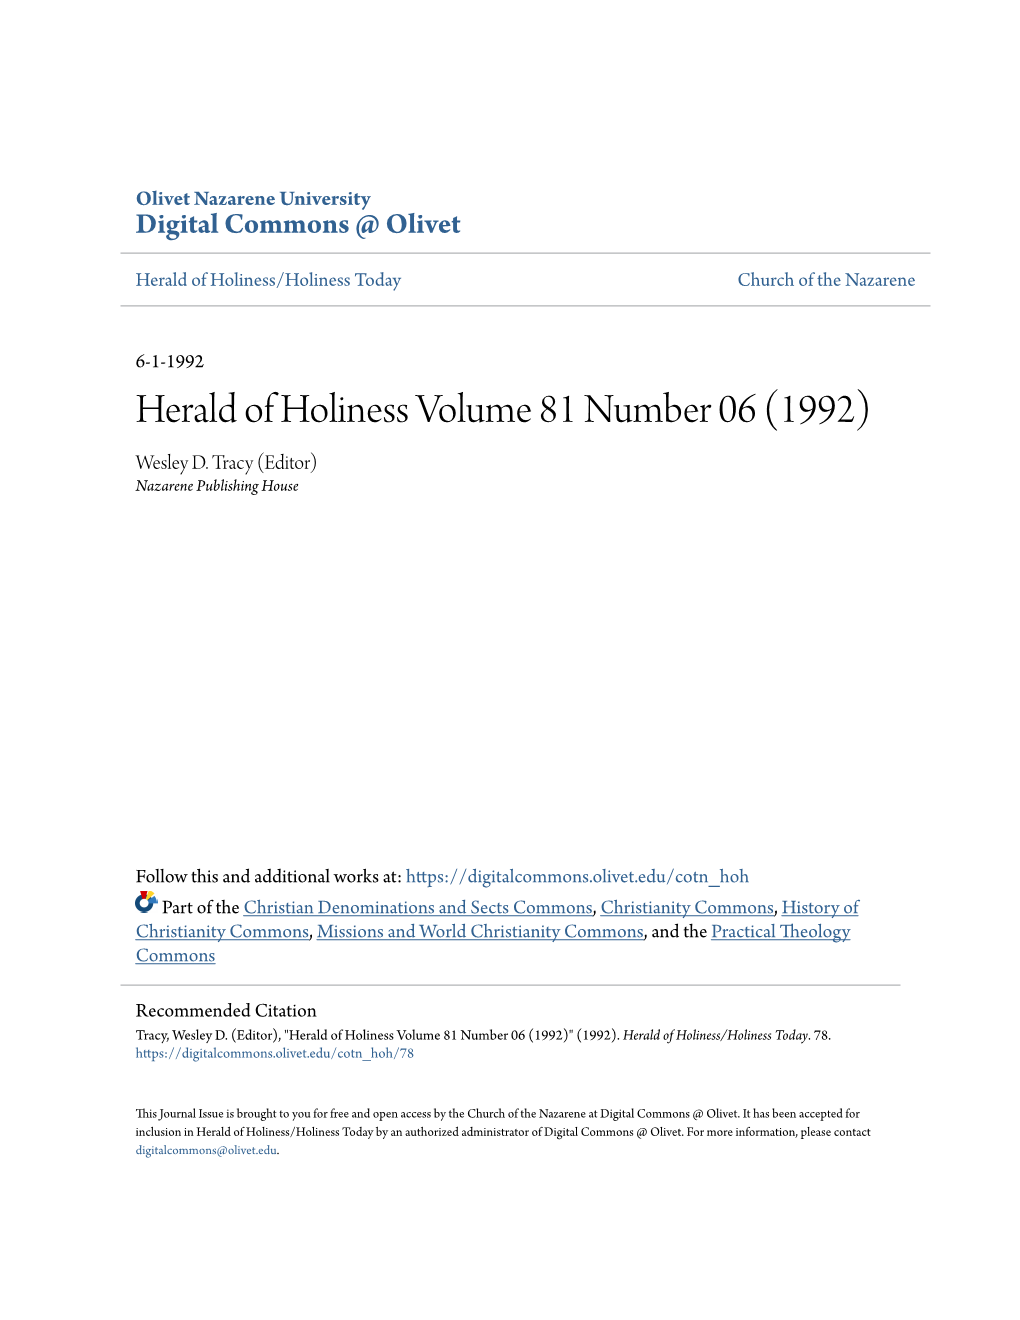 Herald of Holiness Volume 81 Number 06 (1992) Wesley D